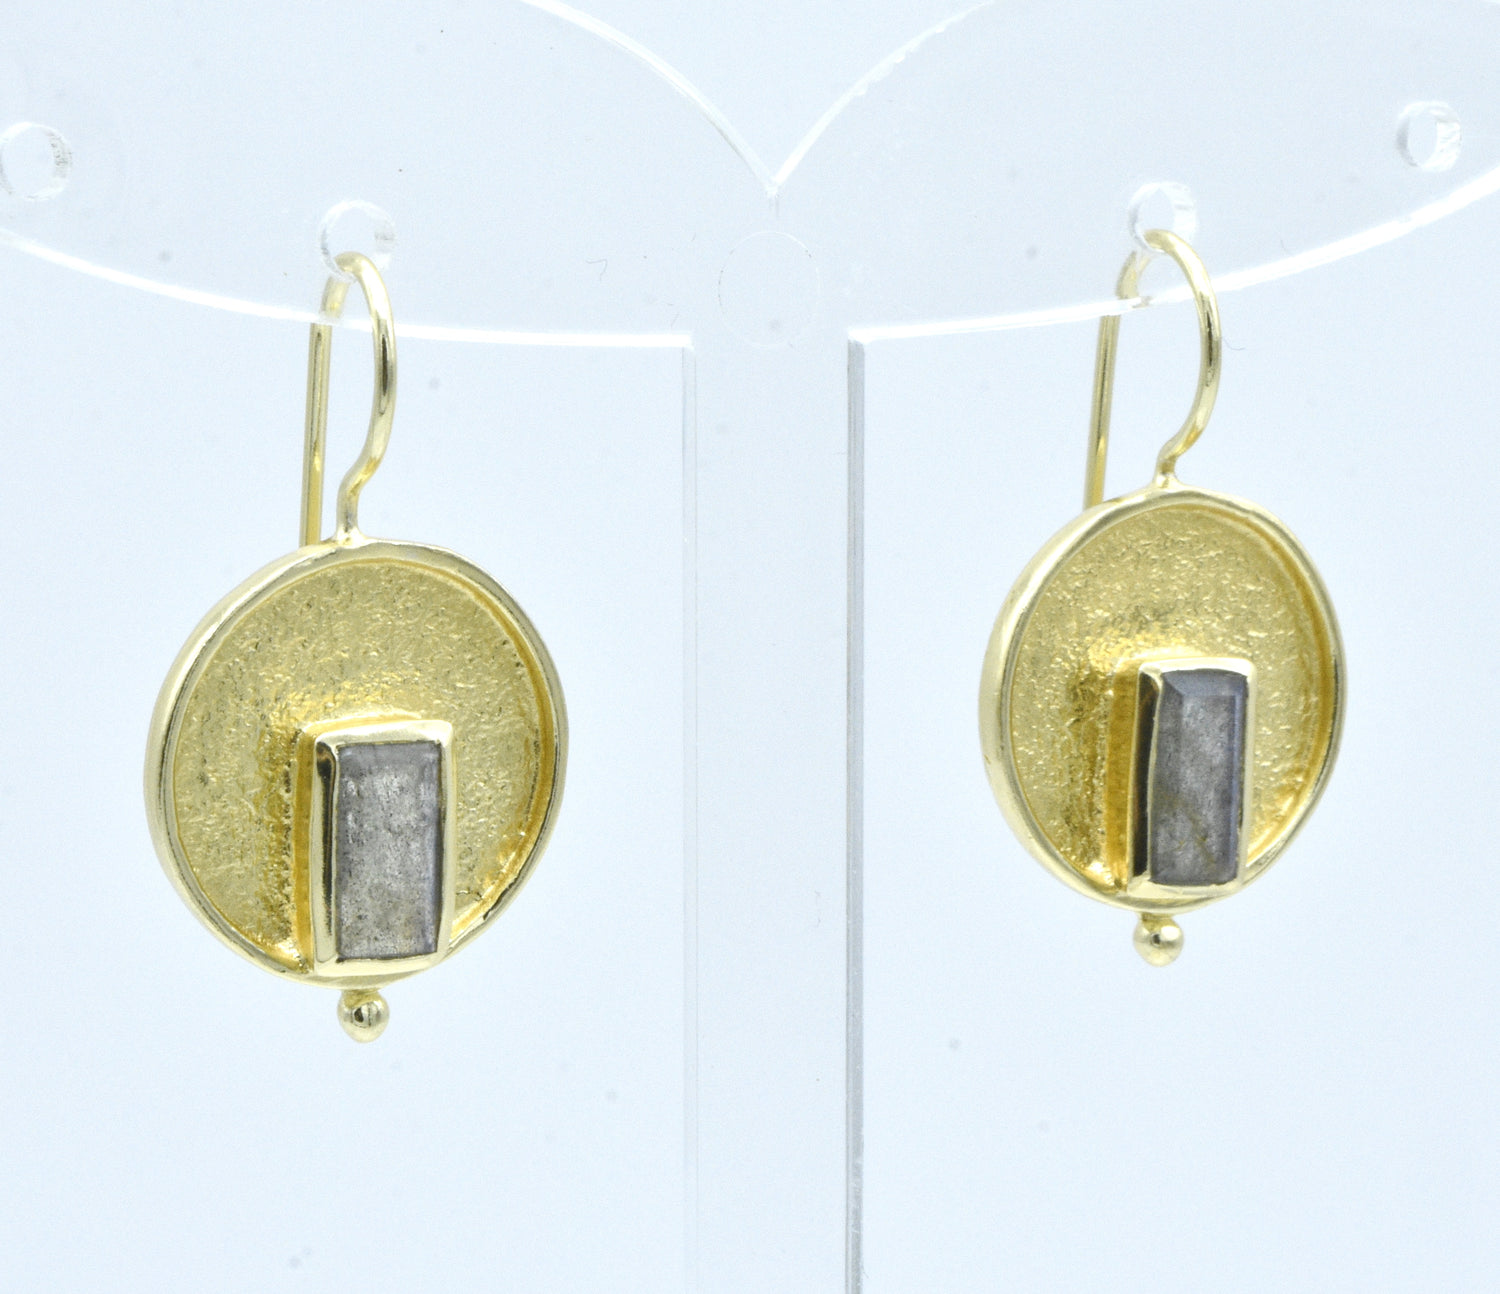 Aylas Labradorite earrings - Gold plated semi precious gemstone - Handmade in Ottoman Style